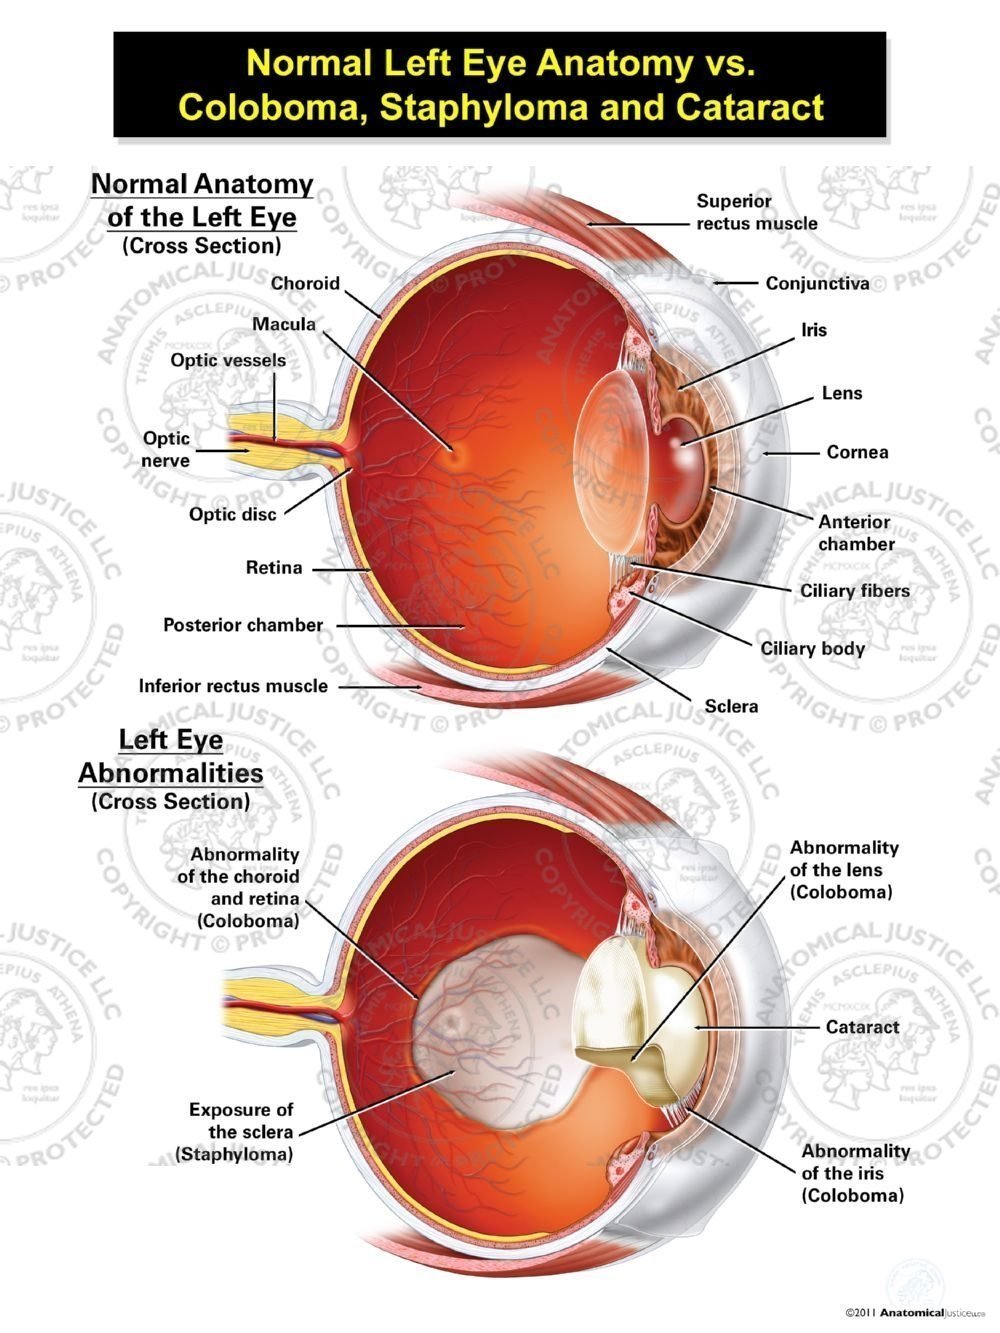 Normal Left Eye Anatomy vs. Coloboma, Staphyloma, and Cataract